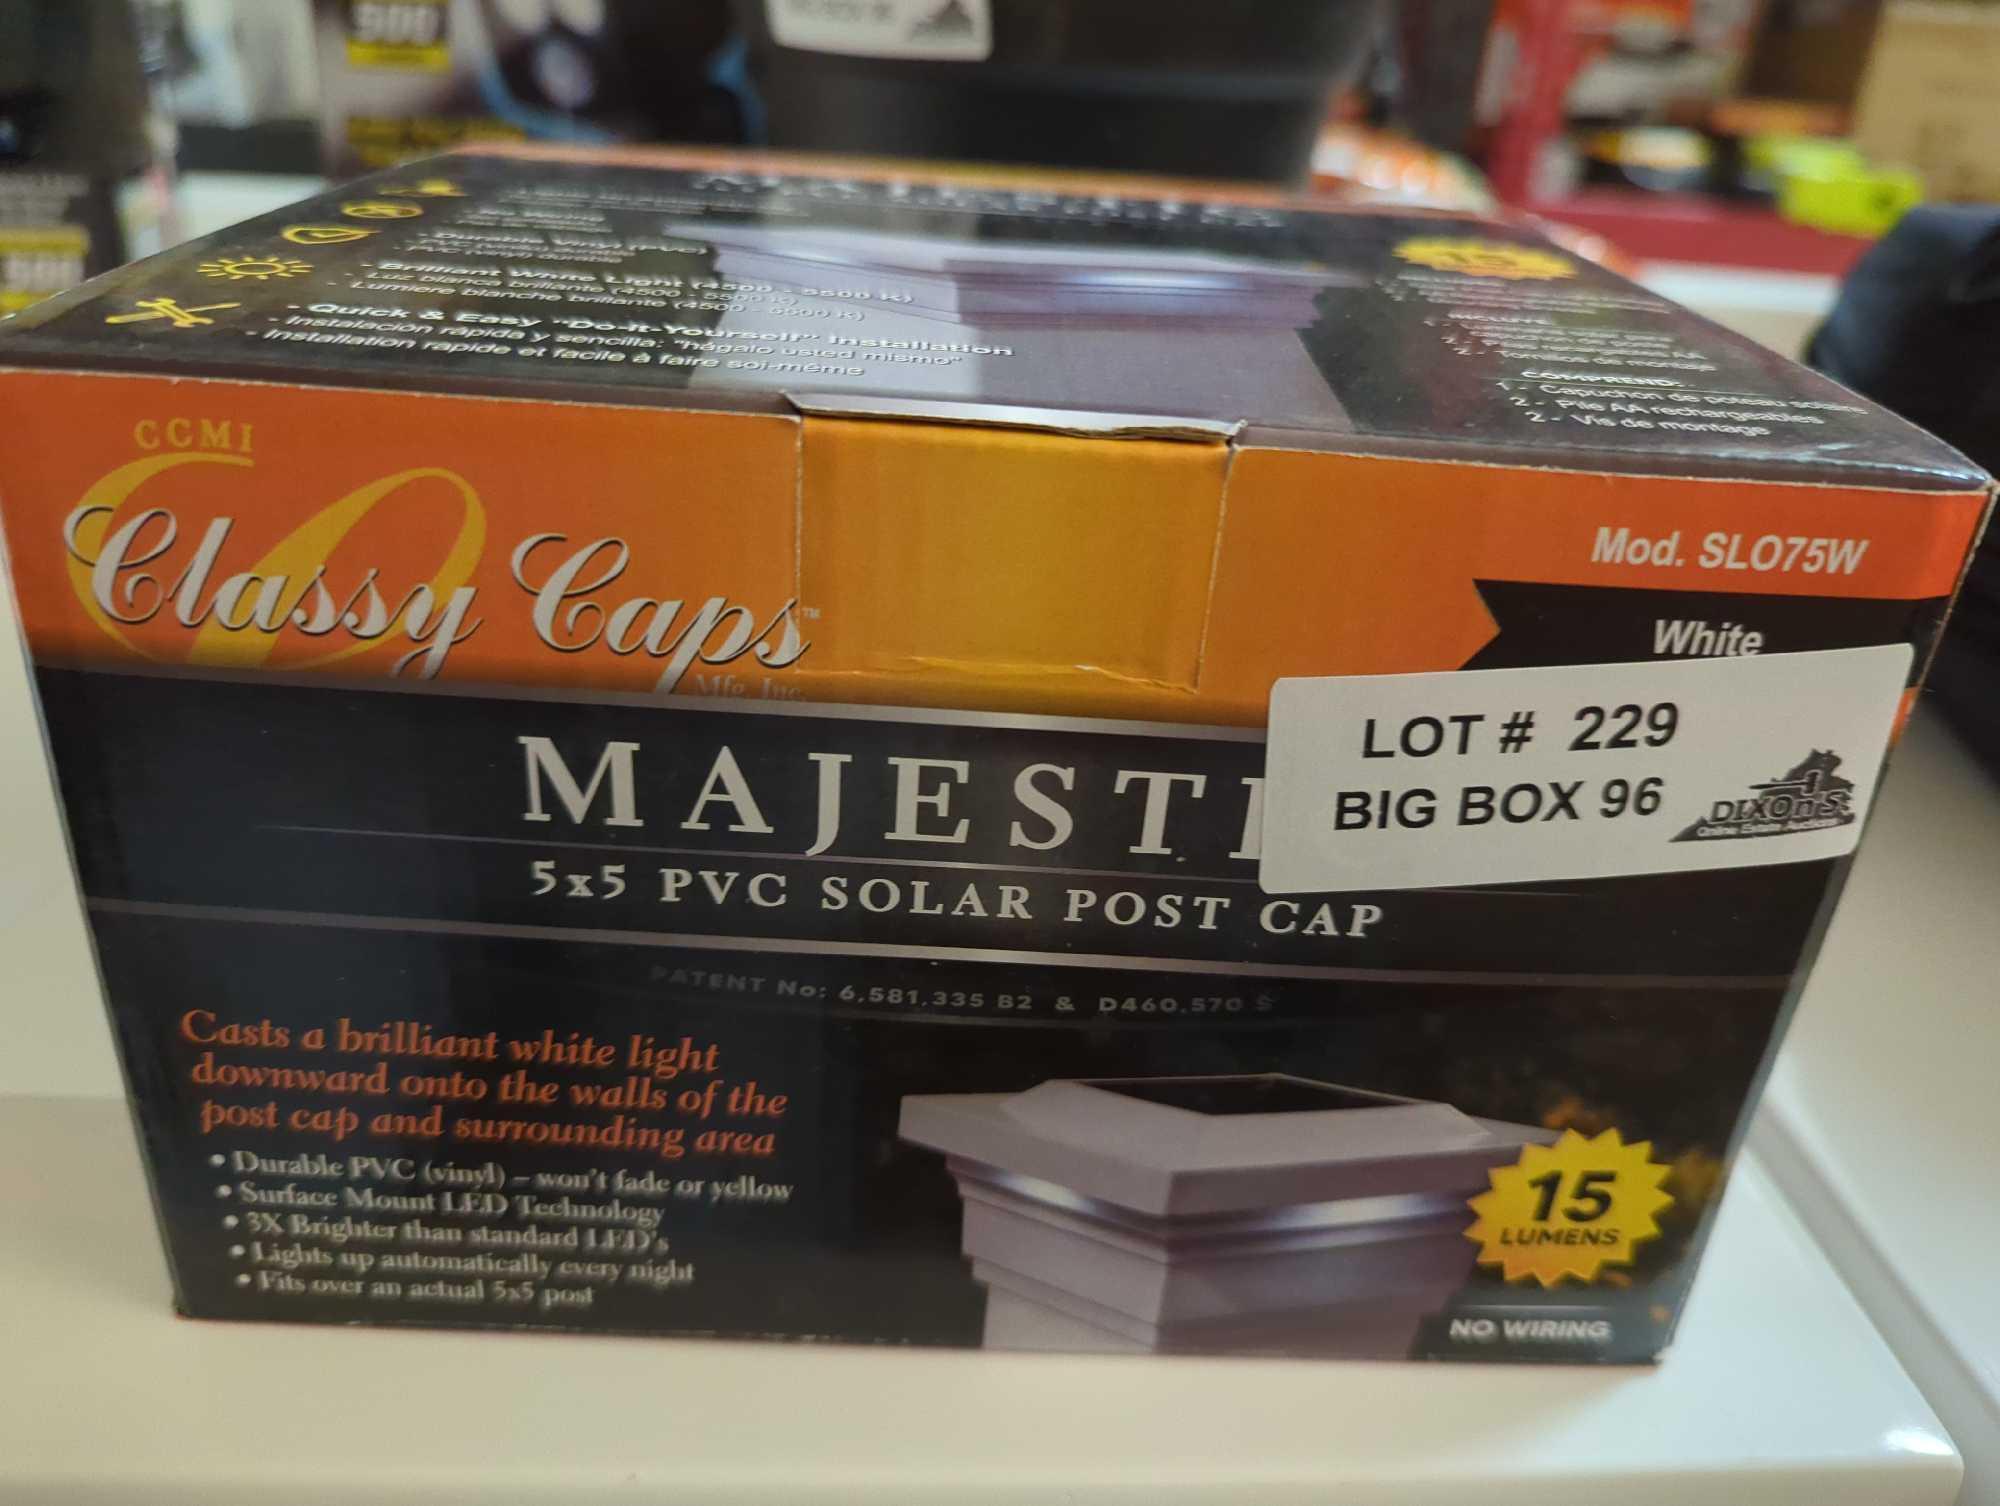 CLASSY CAPS Majestic 5 in. x 5 in. Outdoor White Vinyl LED Solar Post Cap, Model SLO75W, Retail